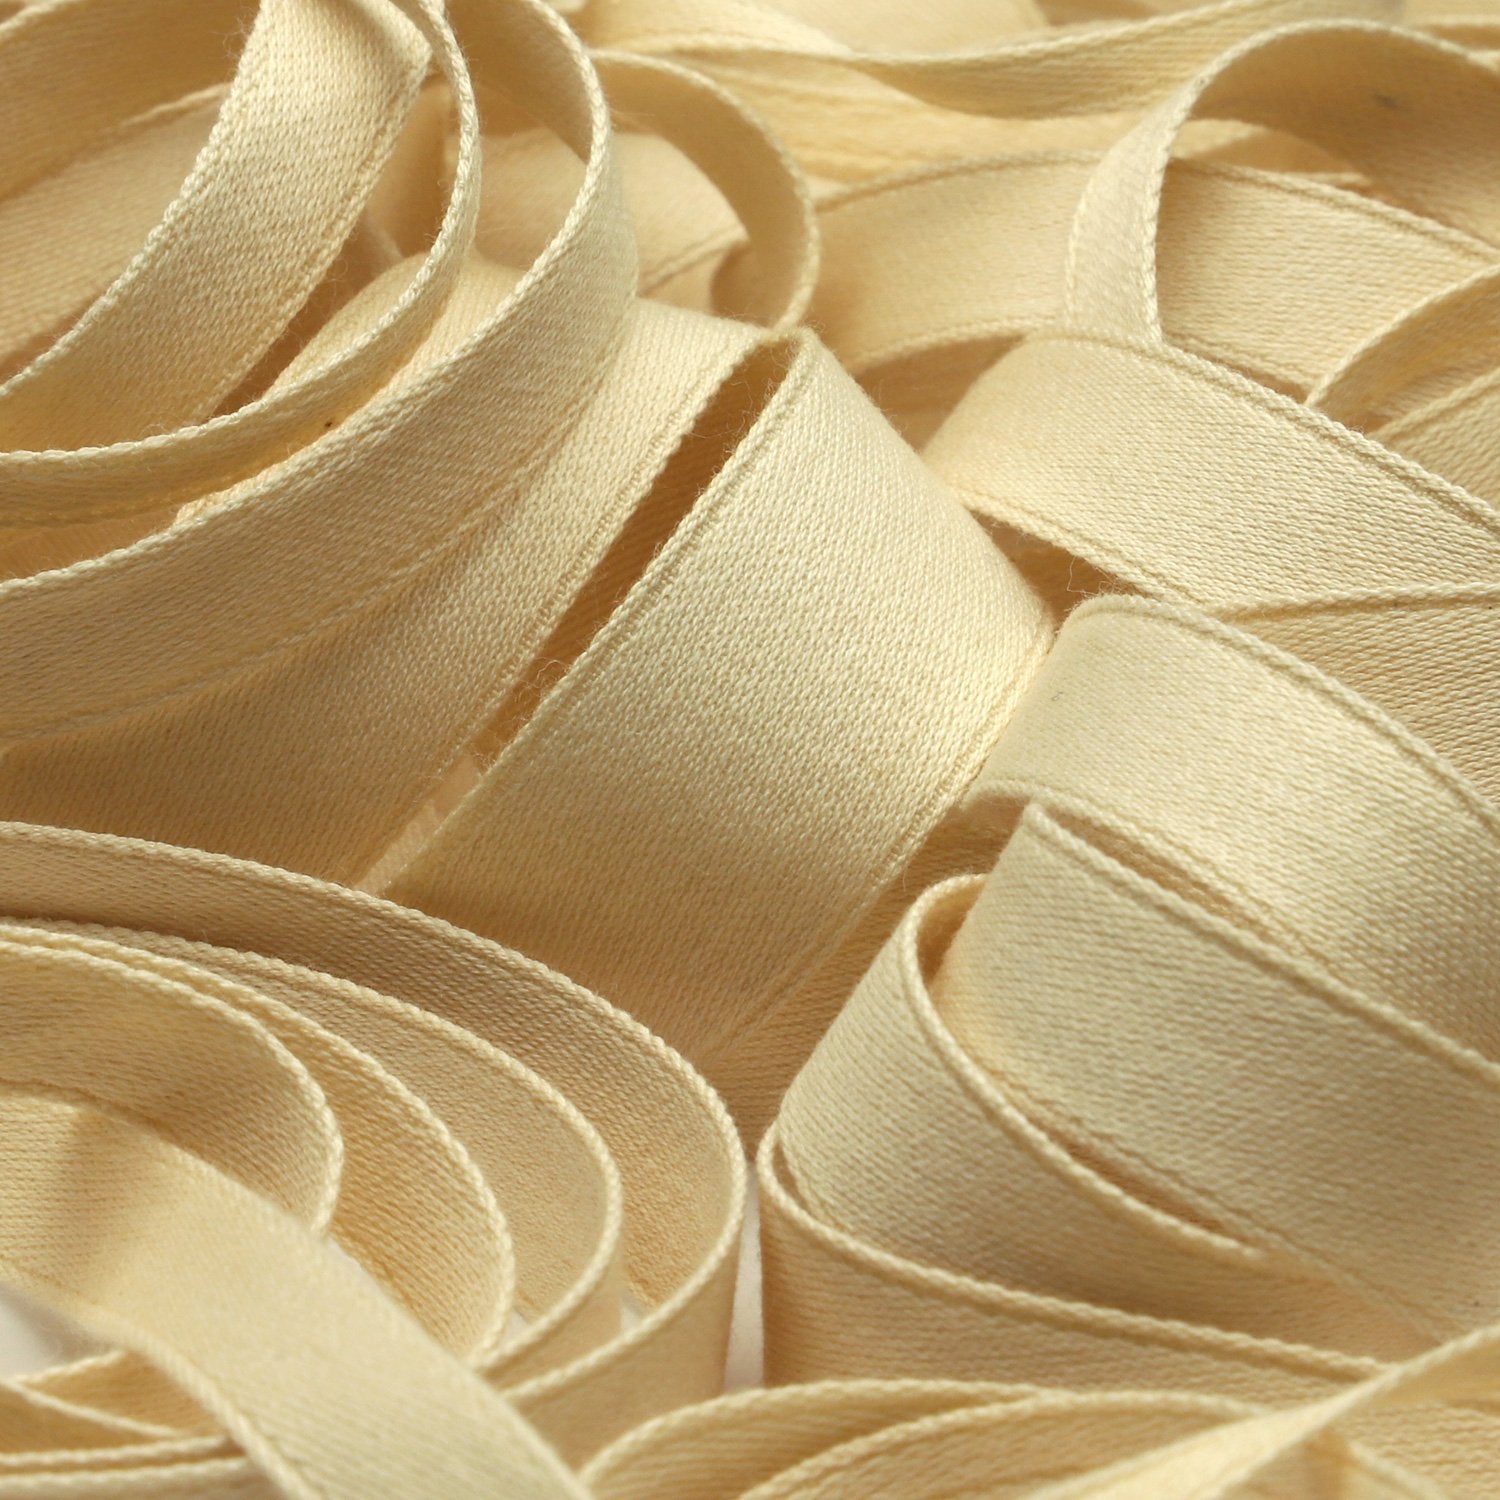 FUJIYAMA RIBBON Organic Cotton Double-Face Satin Ribbon 6mm Ecru 9.14 Meters Roll